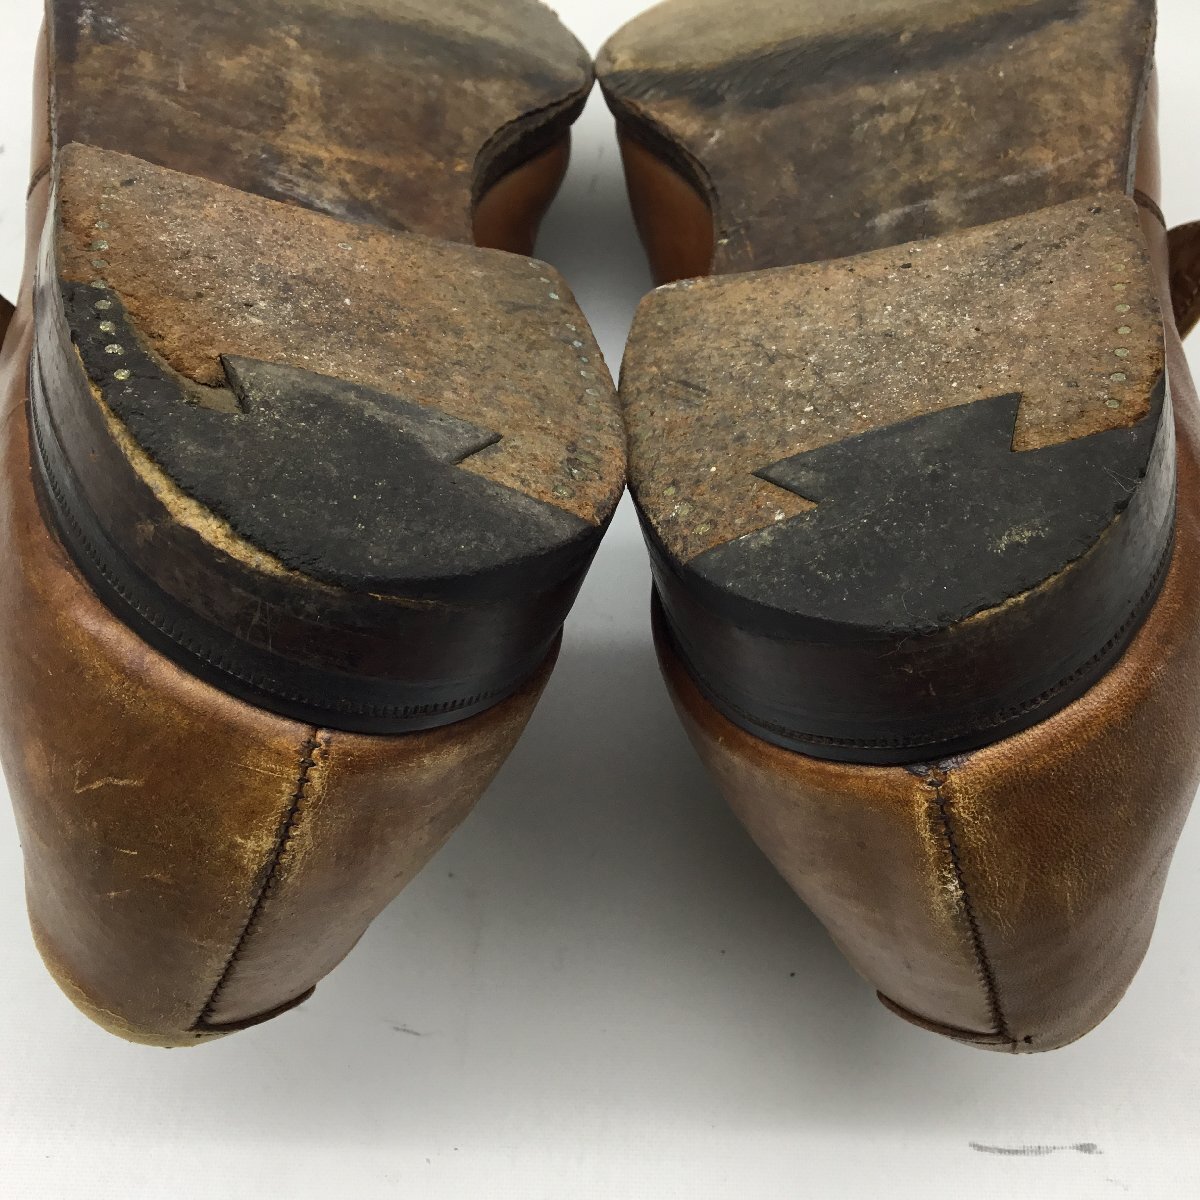 #Poulsen Skone&Co paul (pole) sen scone monk strap leather shoes sole deterioration equipped size unknown perhaps 26./0.81kg